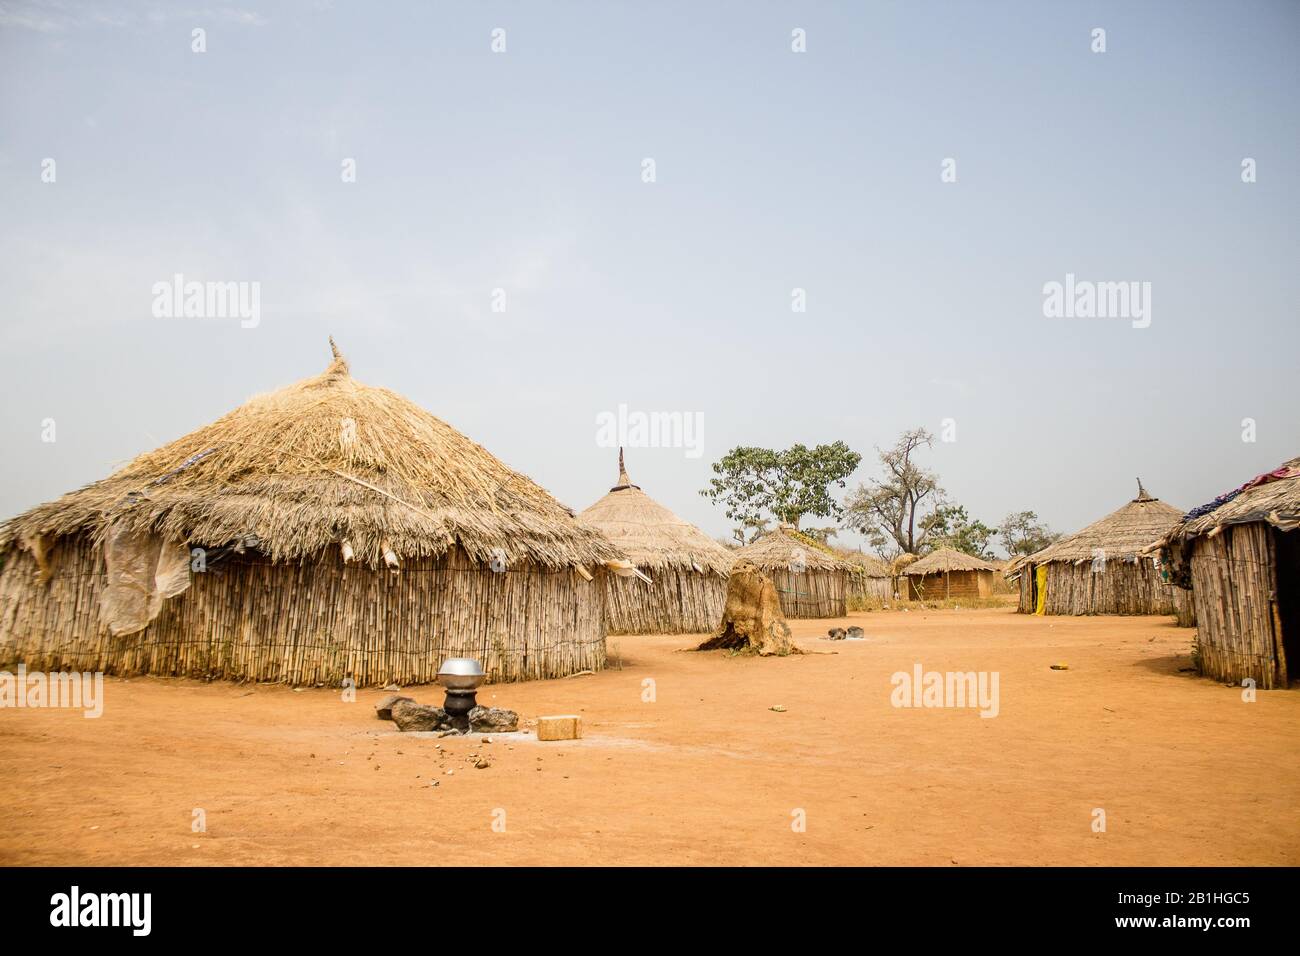 People of Shaape, a village in Abuja, Nigeria. Stock Photo